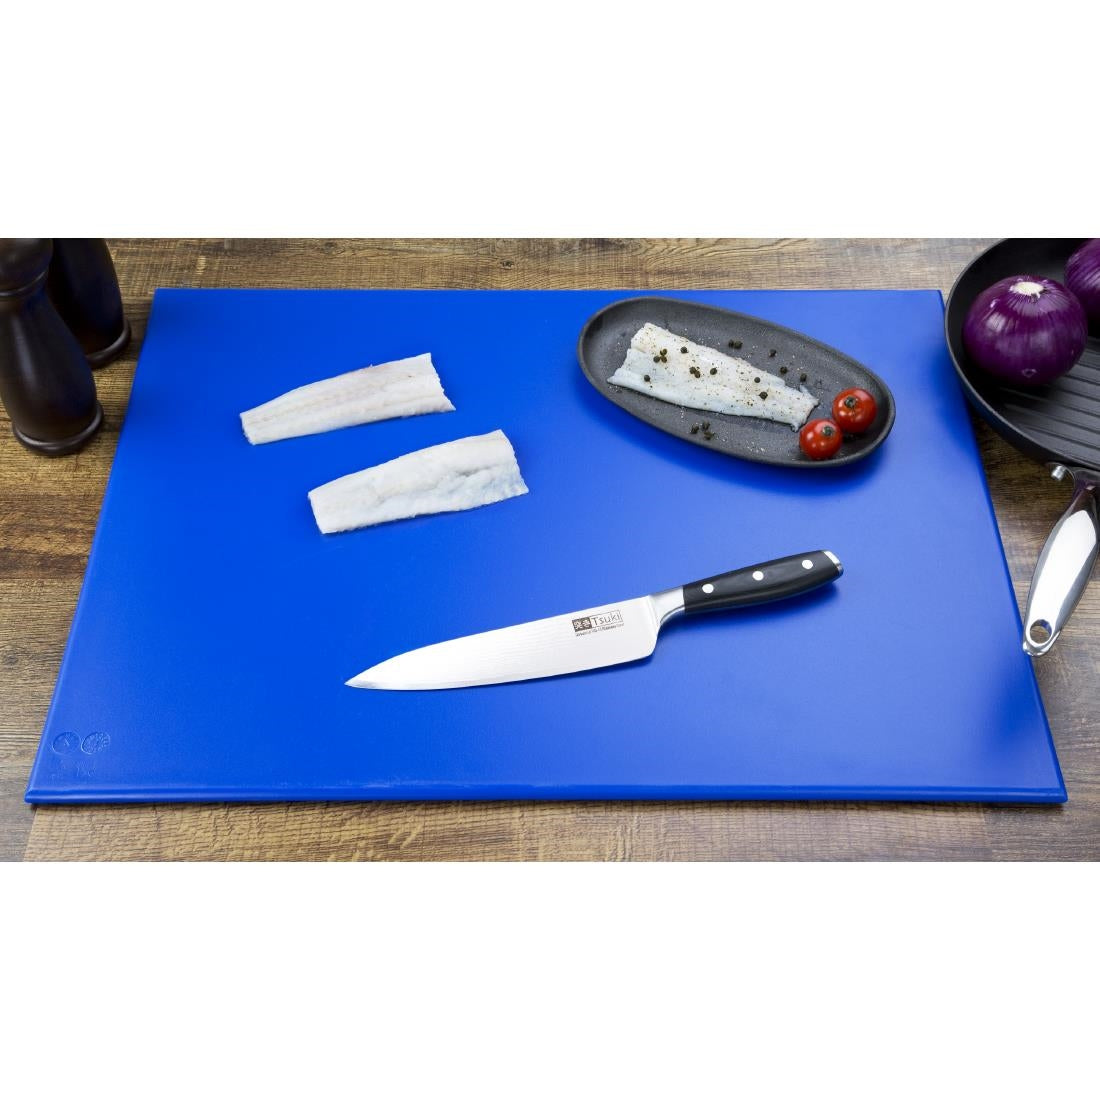 EDLP - Hygiplas High Density Chopping Board Blue - 600x450x12mm 23.5x17.75x0.5"